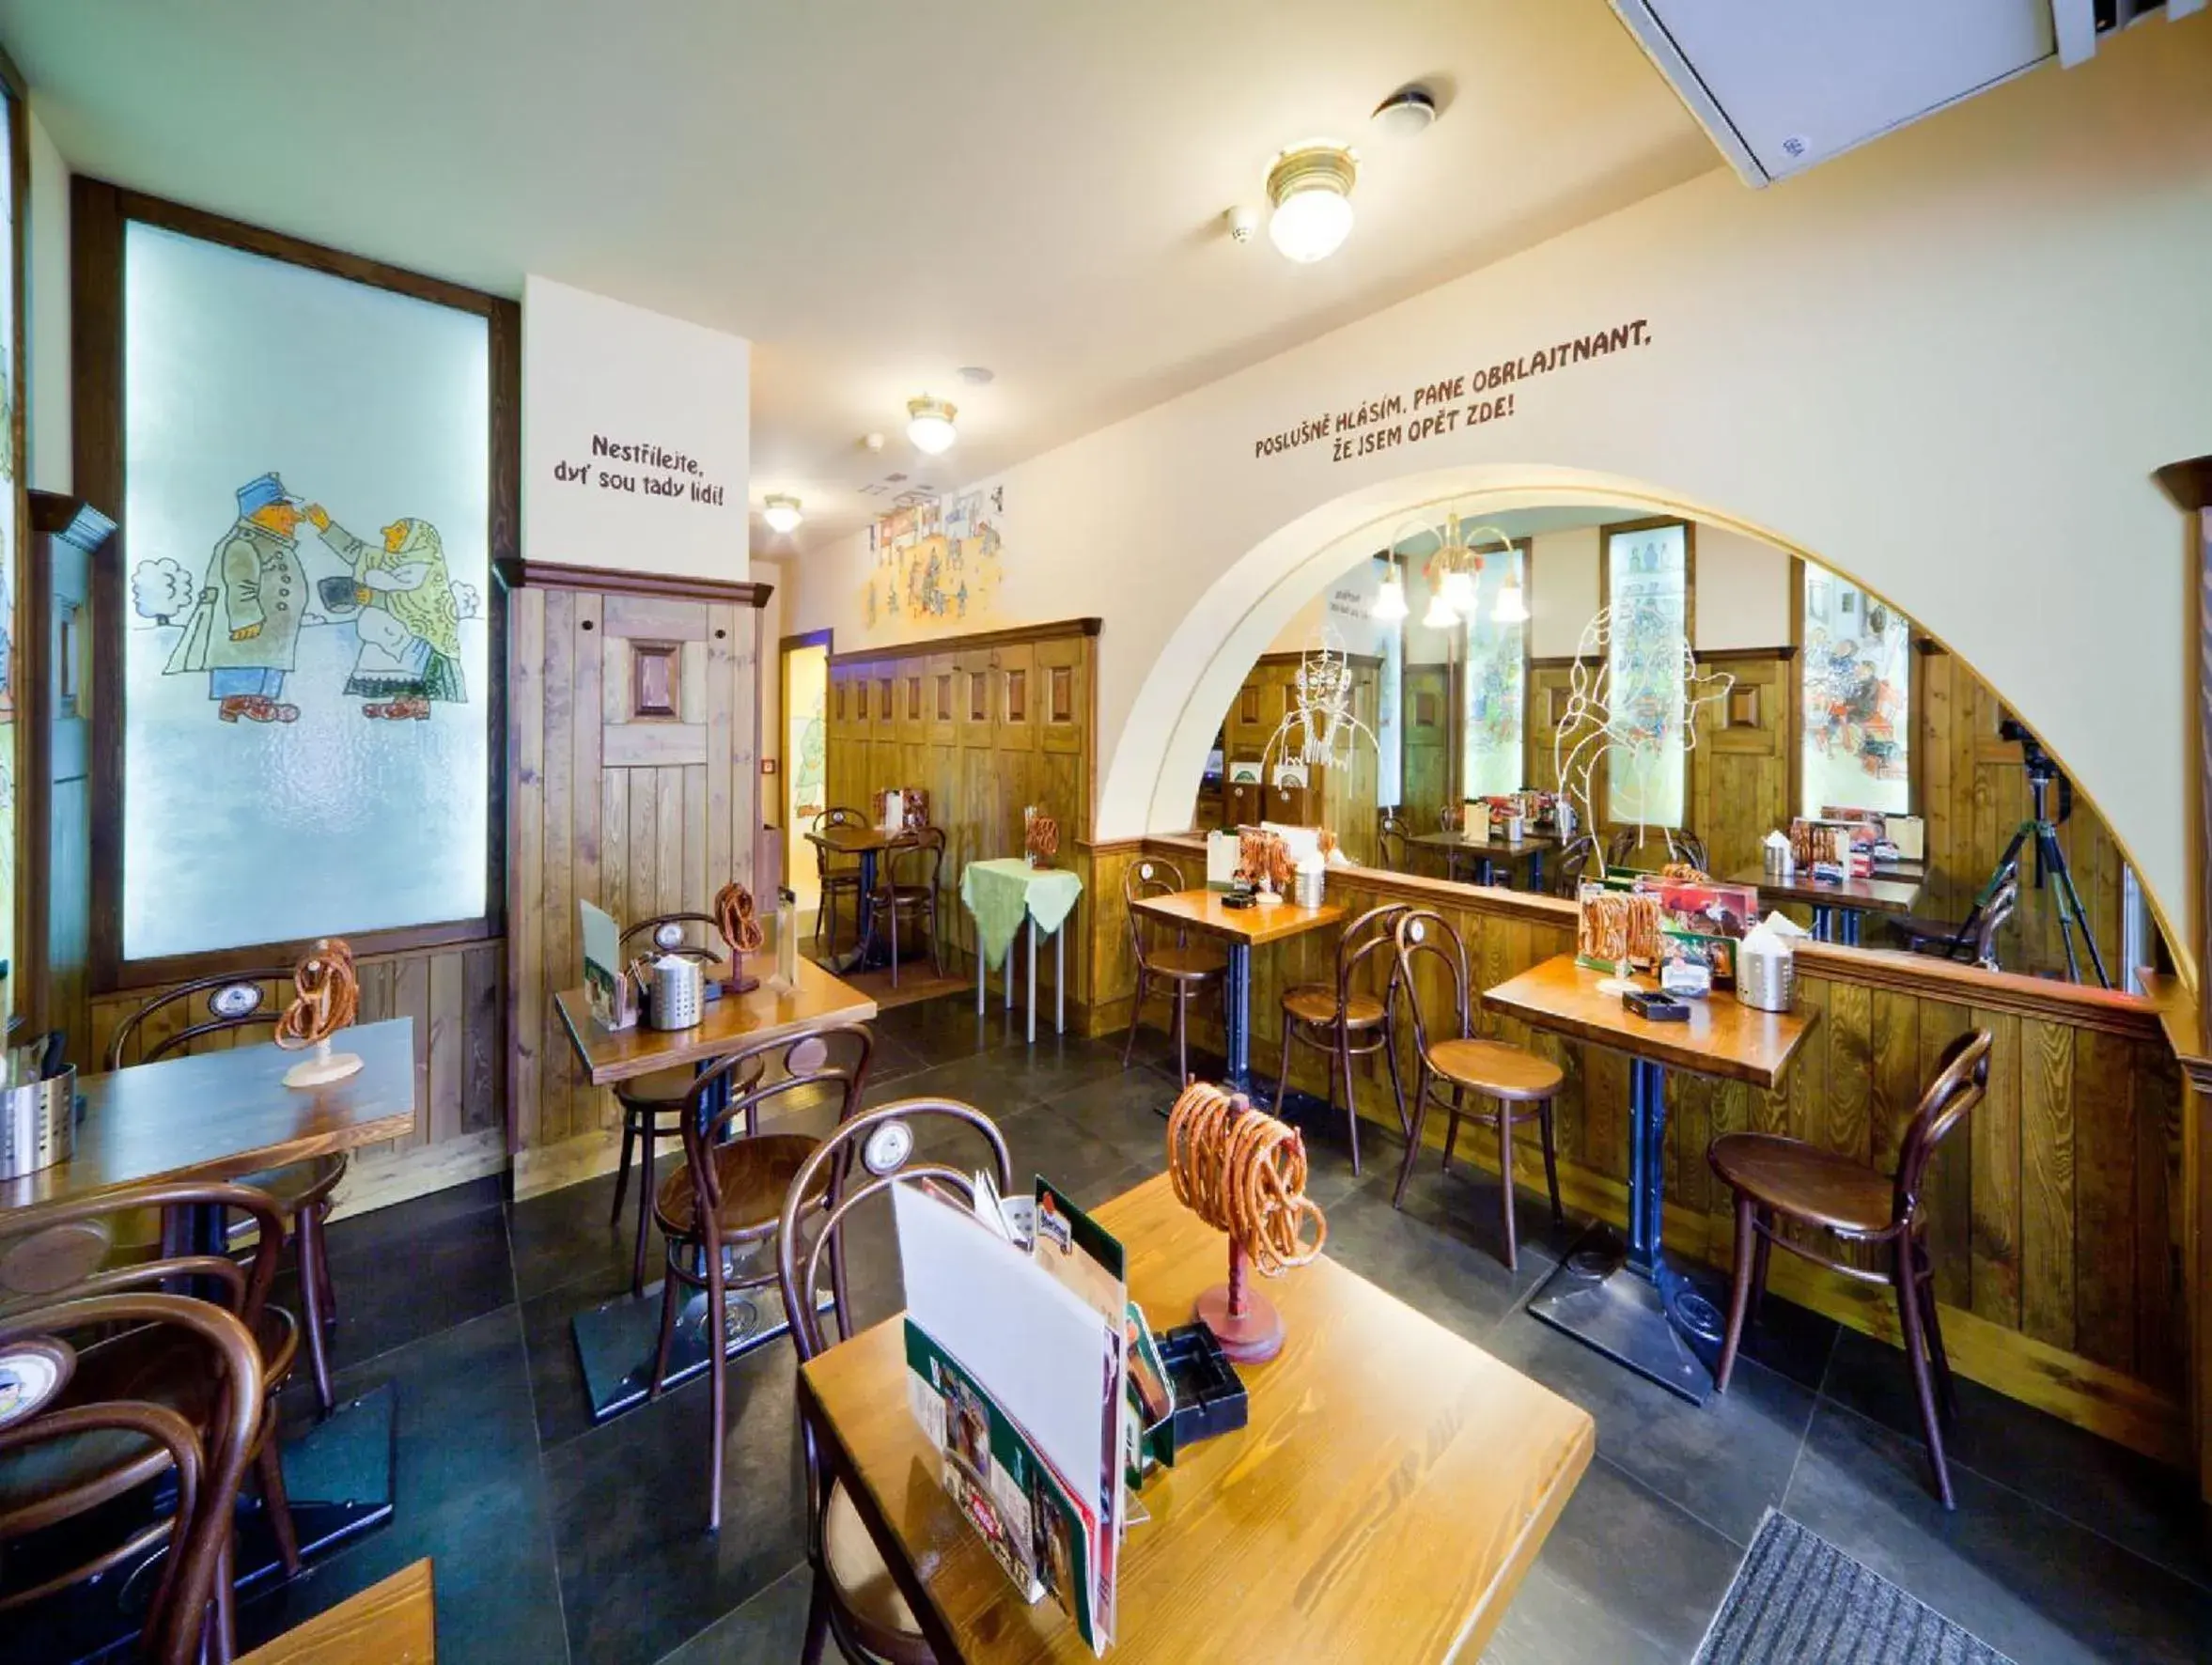 Restaurant/Places to Eat in Prague Inn